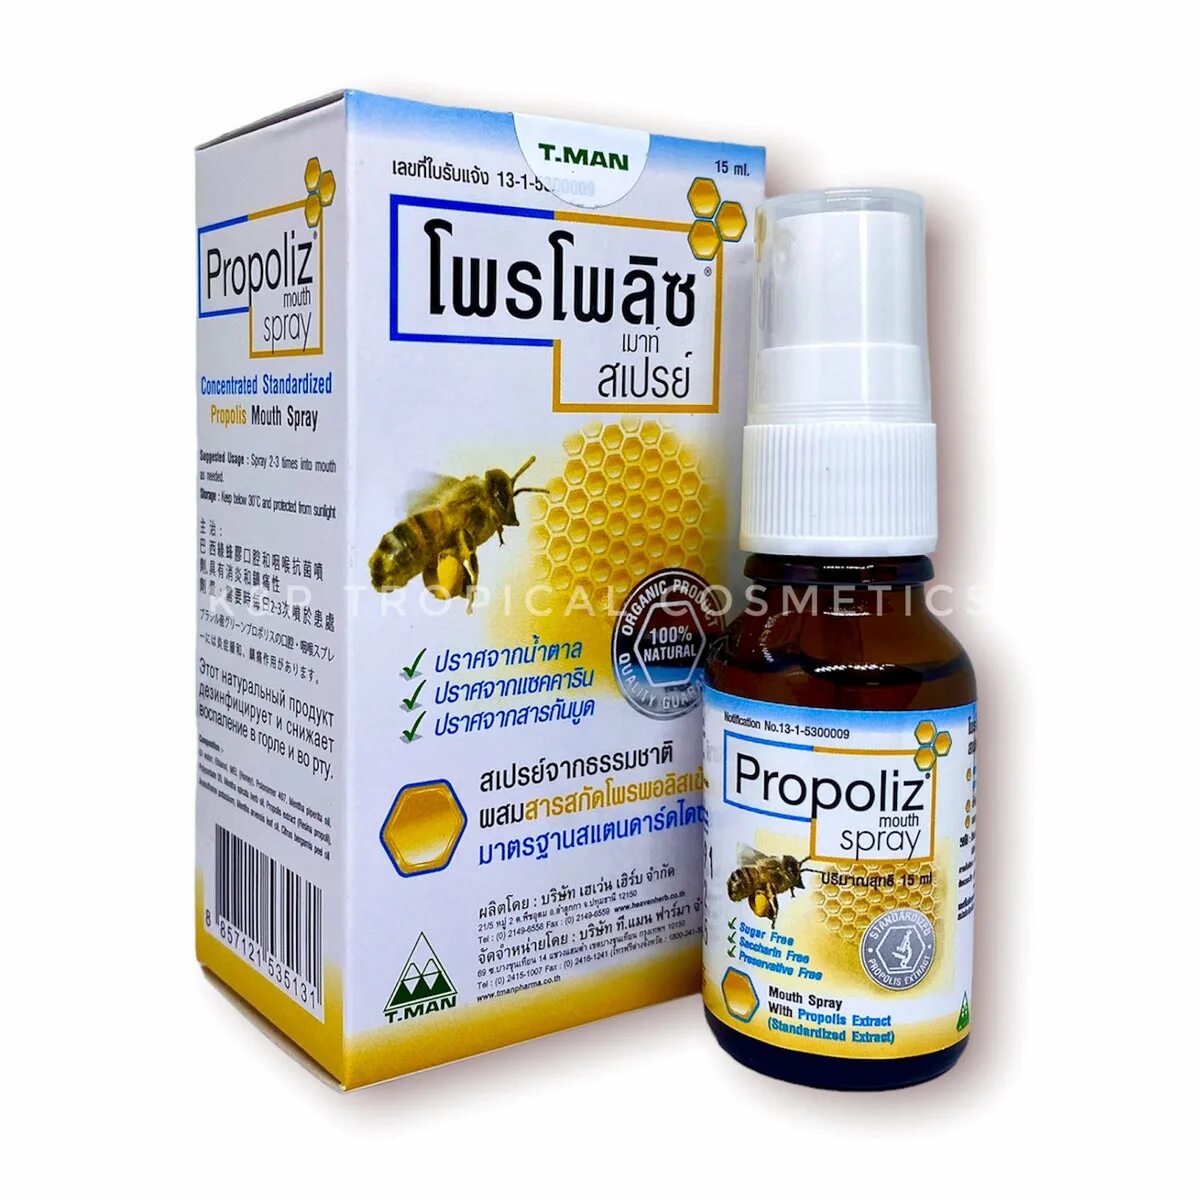 Доктор ангин. Propoliz Spray Thailand 10 ml. T.man Pharma Propoliz mouth Spray тайский спрей от боли в горле с прополисом 15ml. Тайский спрей Propolis. Спрей Propoliz mouth Spray, 15ml.